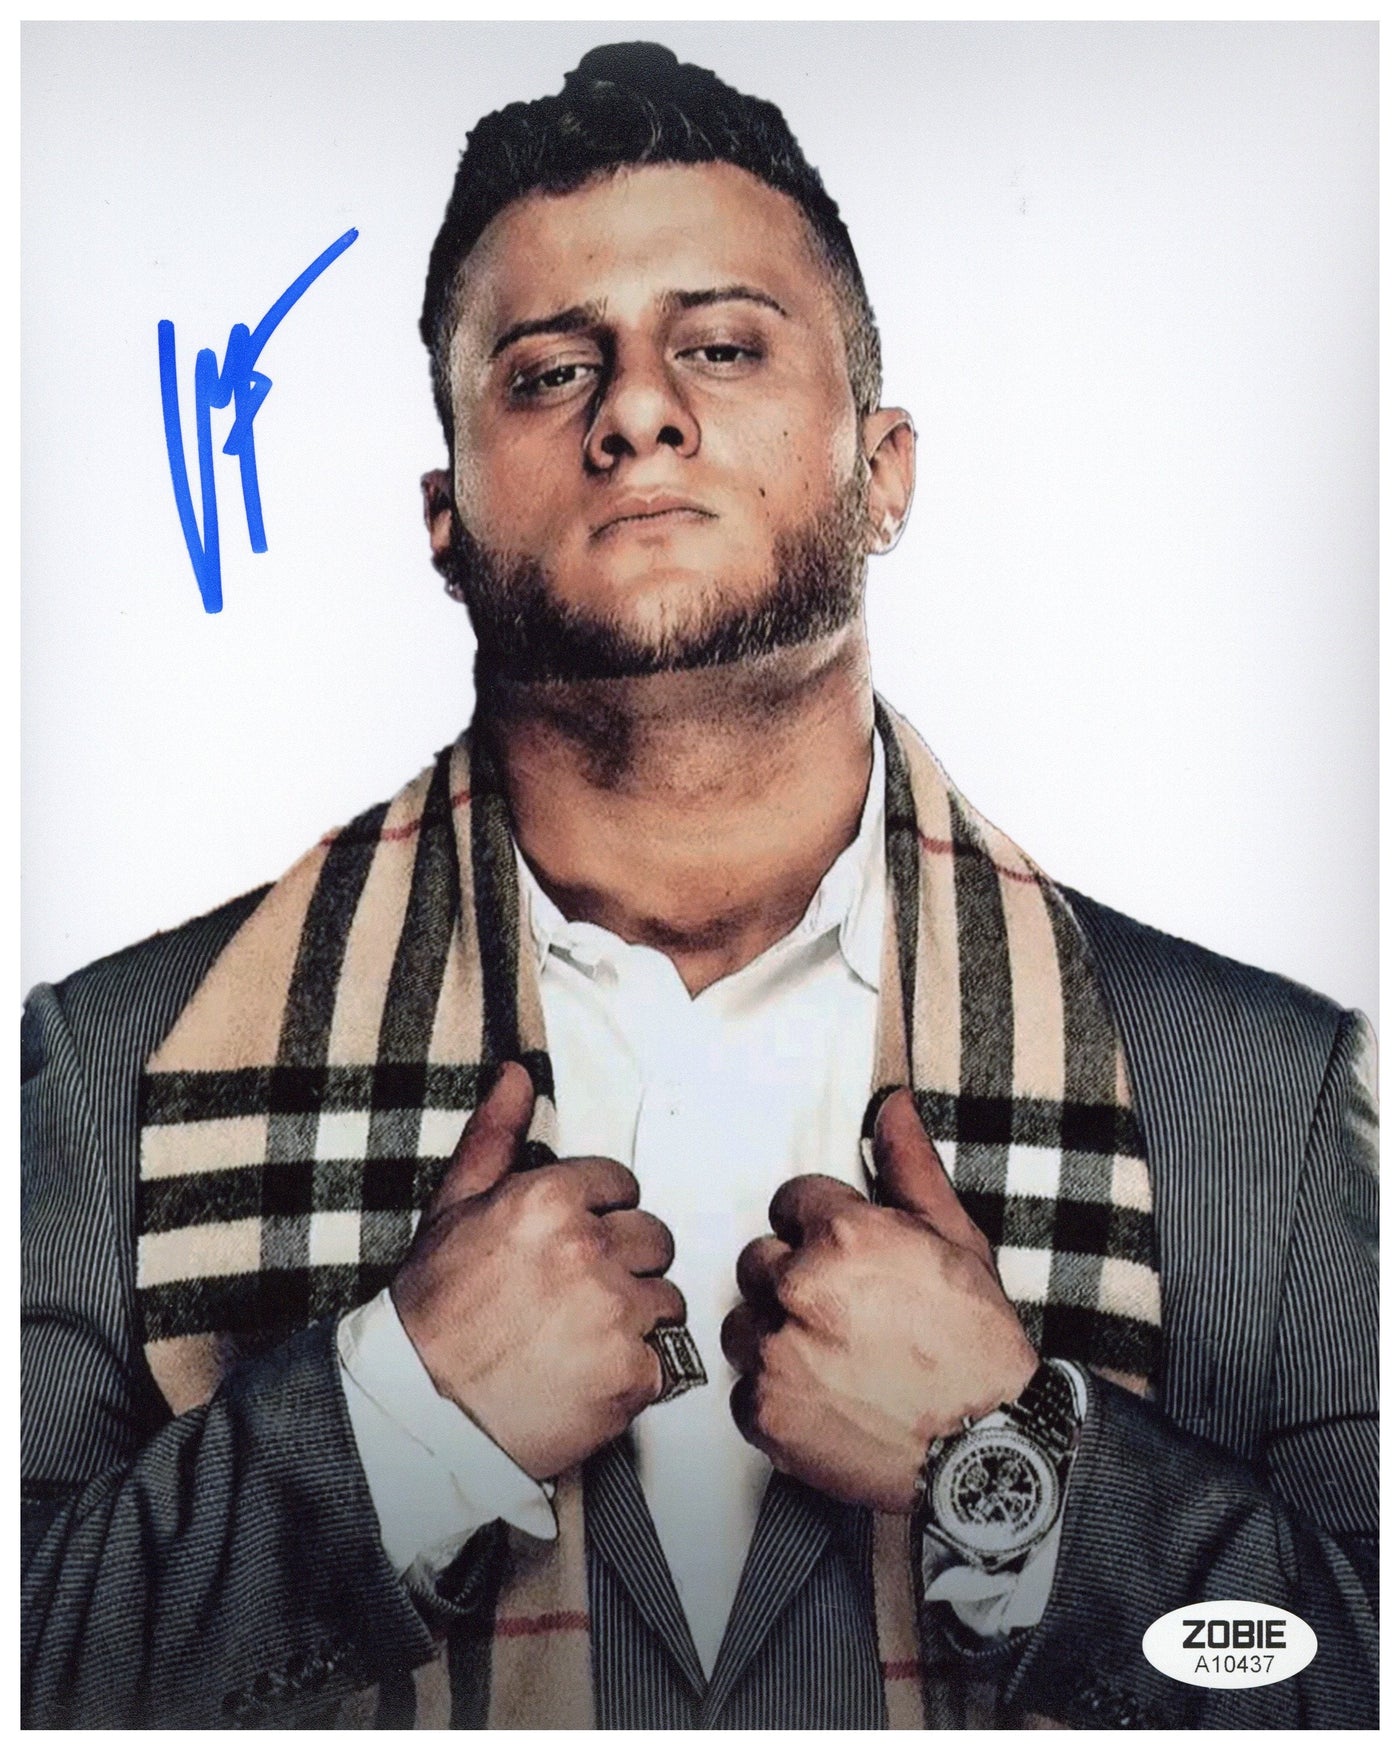 Maxwell Jacob Friedman Signed 8x10 Photo AEW “MJF” Autographed Zobie COA